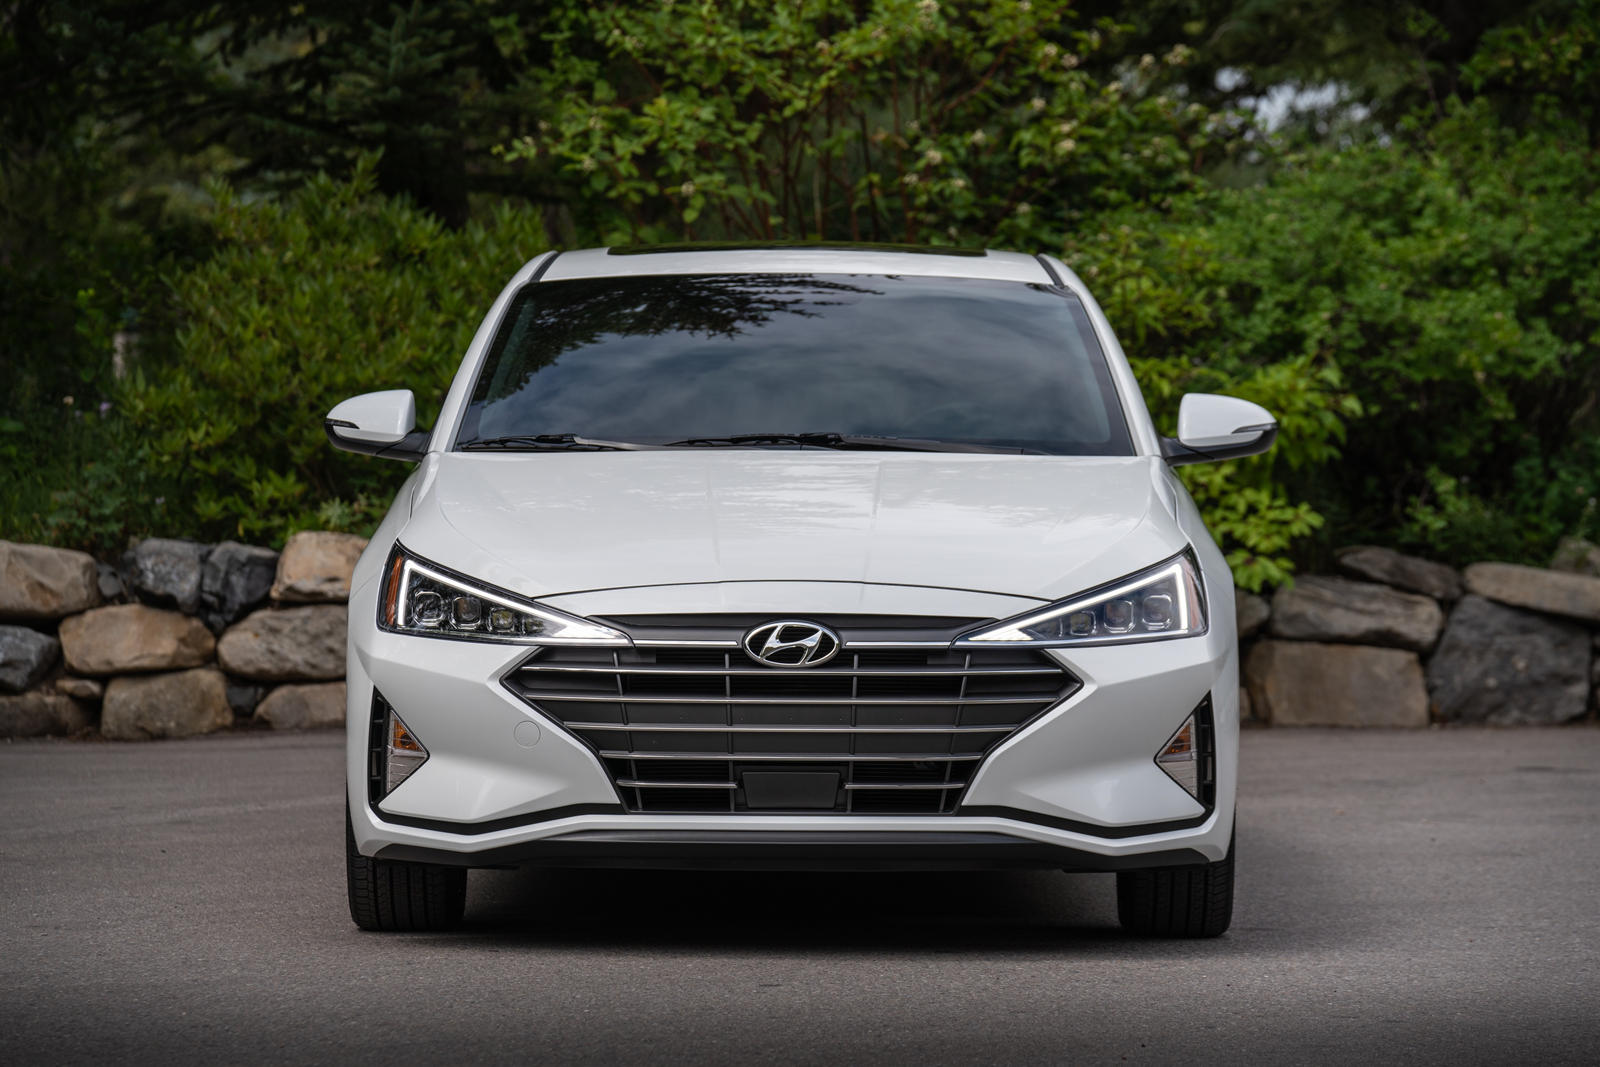 2020 Hyundai Elantra Front View